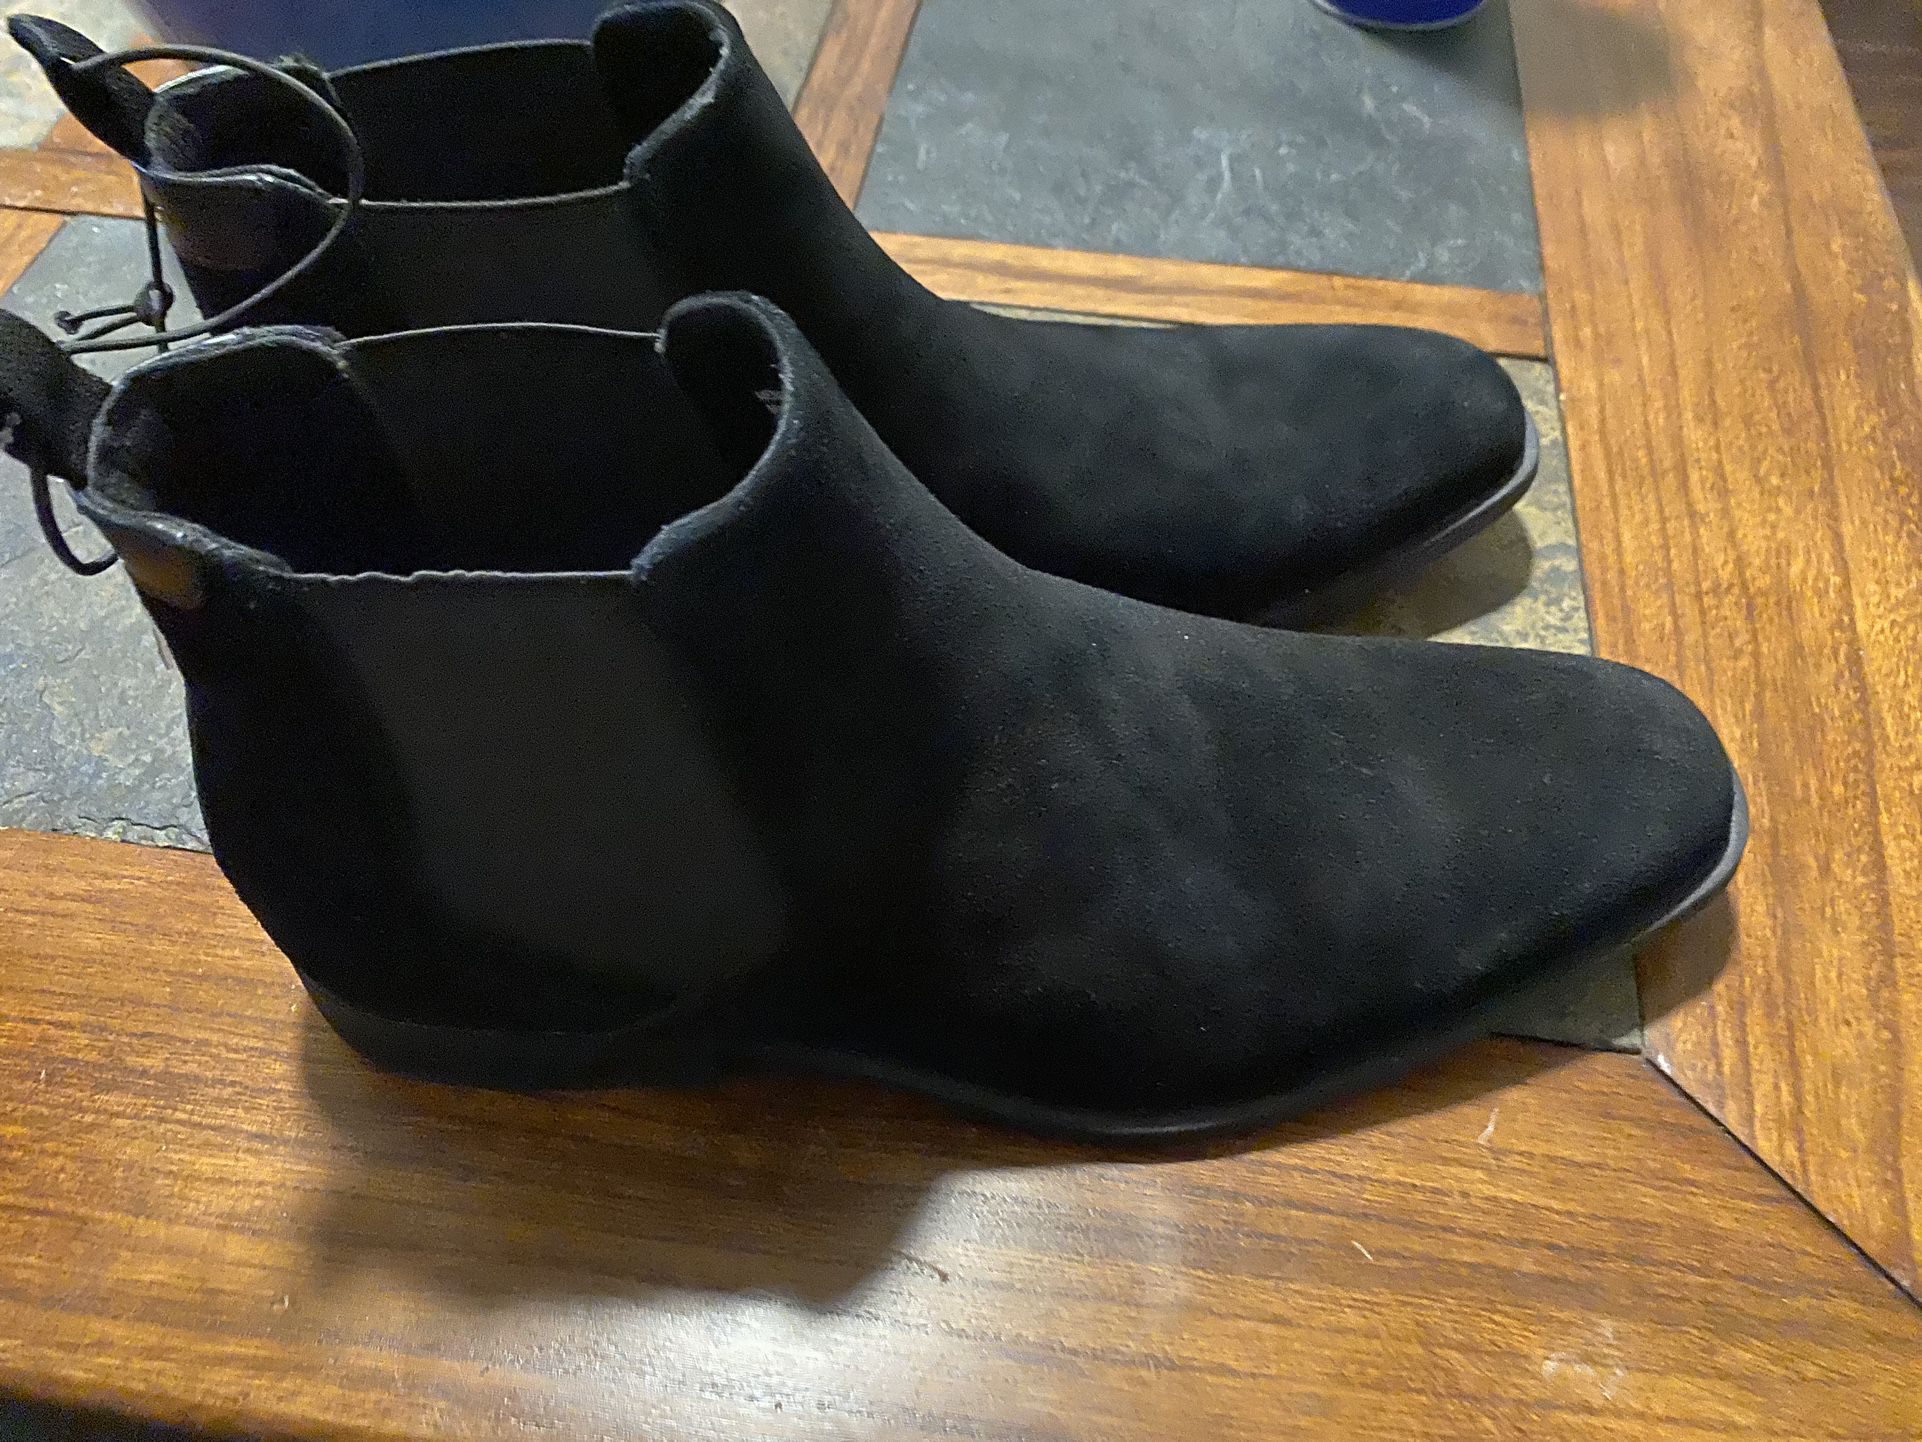 New Mens size 10 Aldo boots, genuine suede